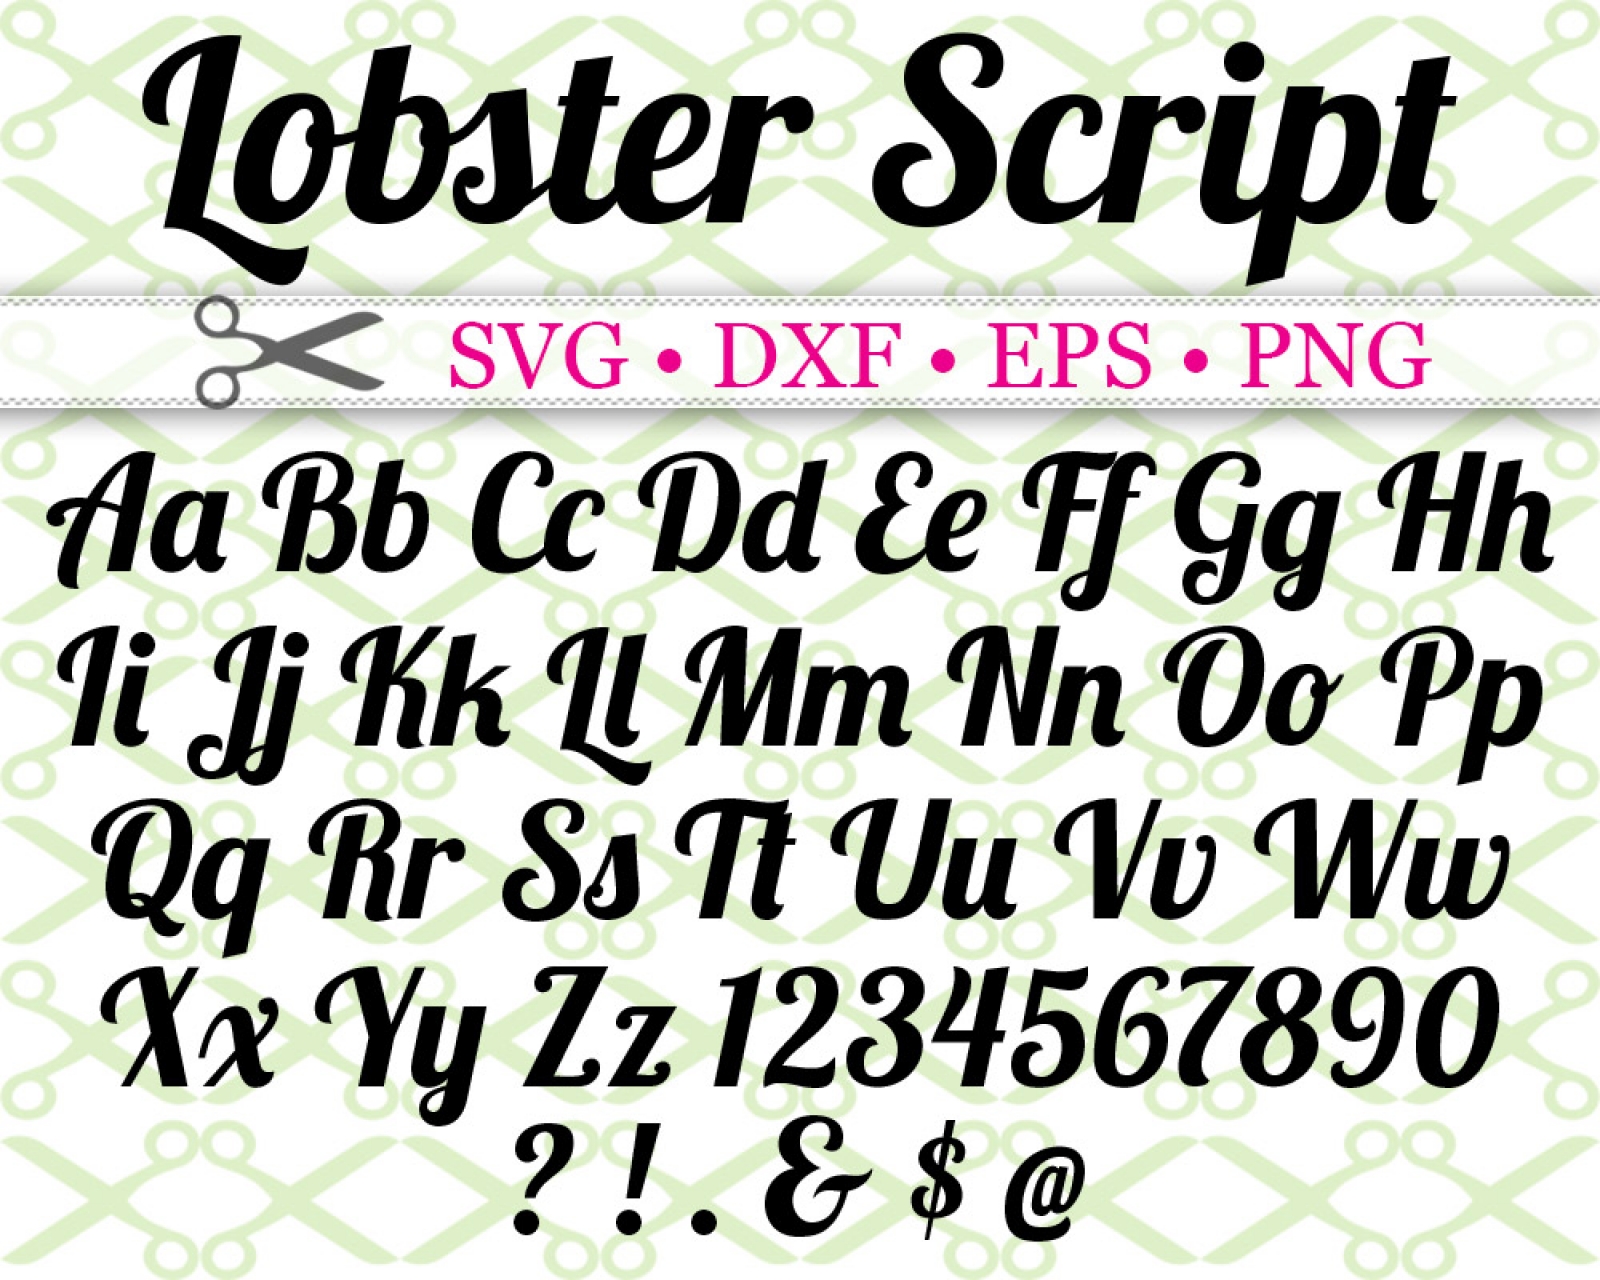 LOBSTER SCRIPT FONT SVG FILE-Cricut & Silhouette Files SVG DXF EPS PNG